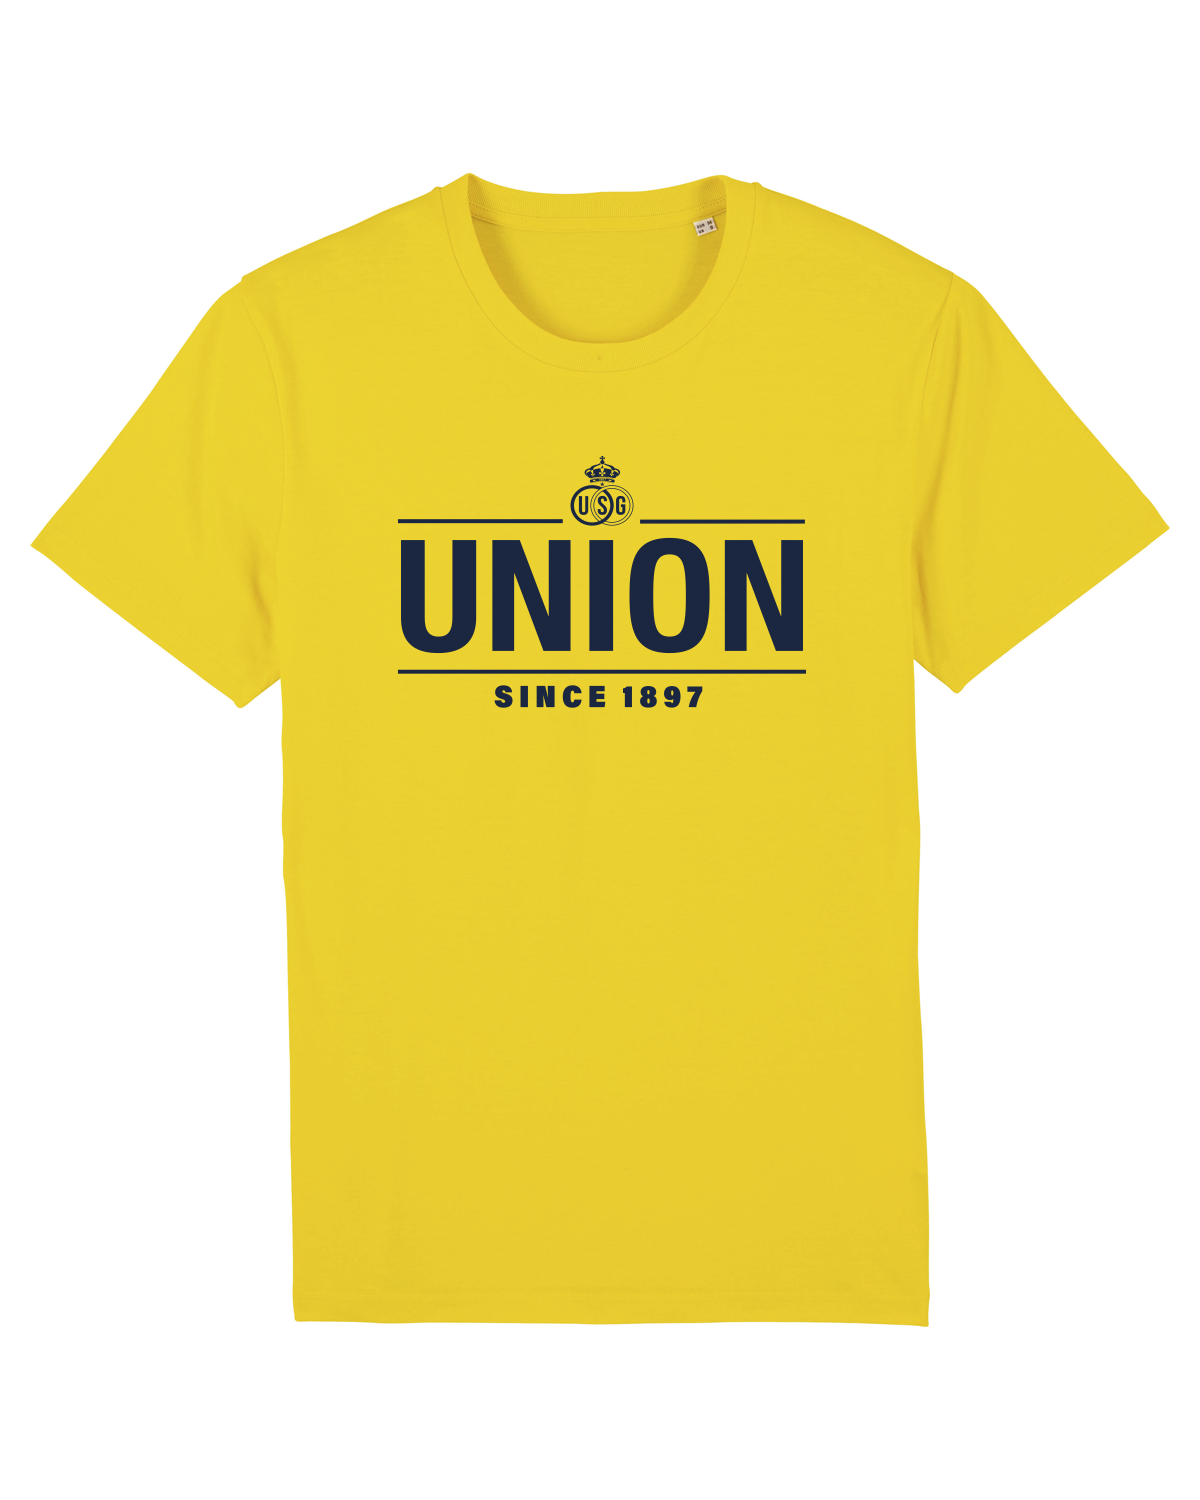 Topfanz T- shirt geel Union Since 1897